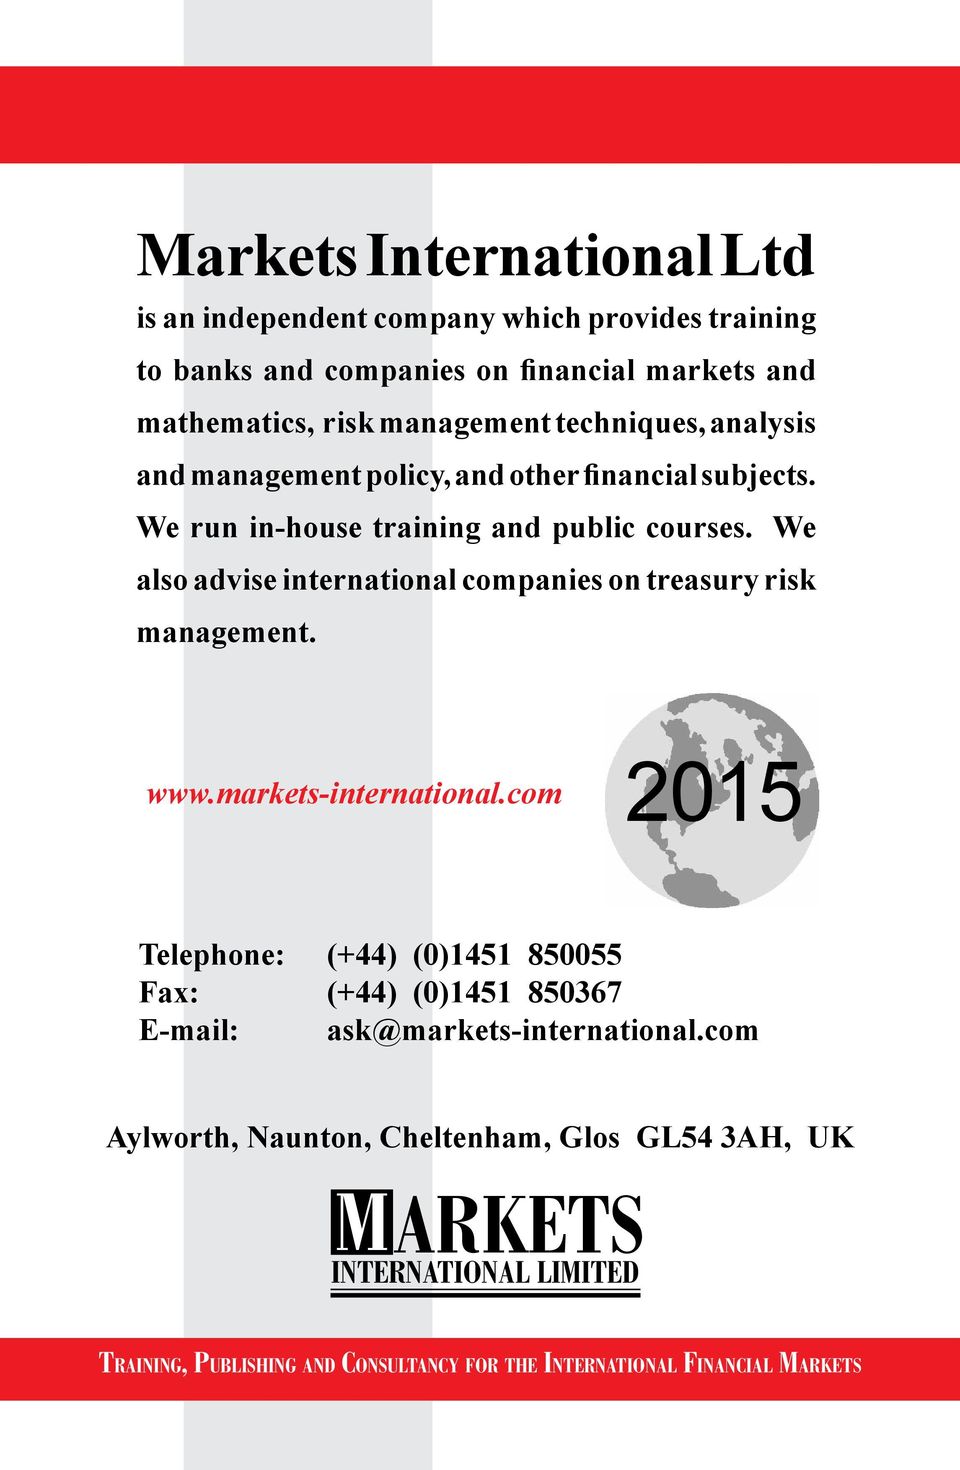 We also advise international companies on treasury risk management. www.markets-international.